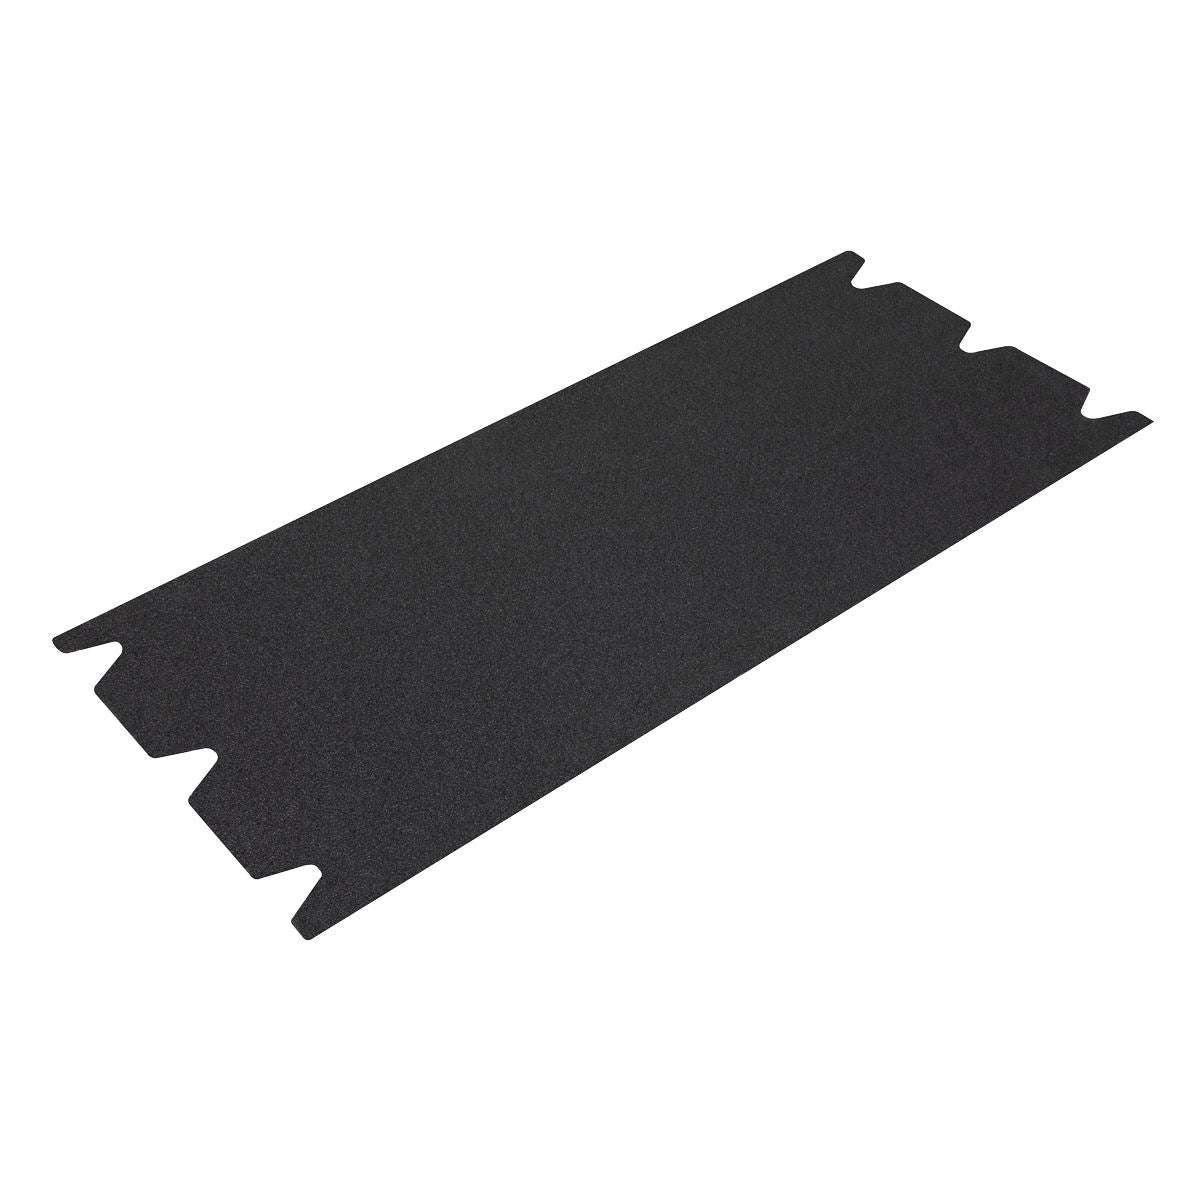 Sealey Floor Sanding Sheet 203 x 495mm 60Grit - Pack of 5